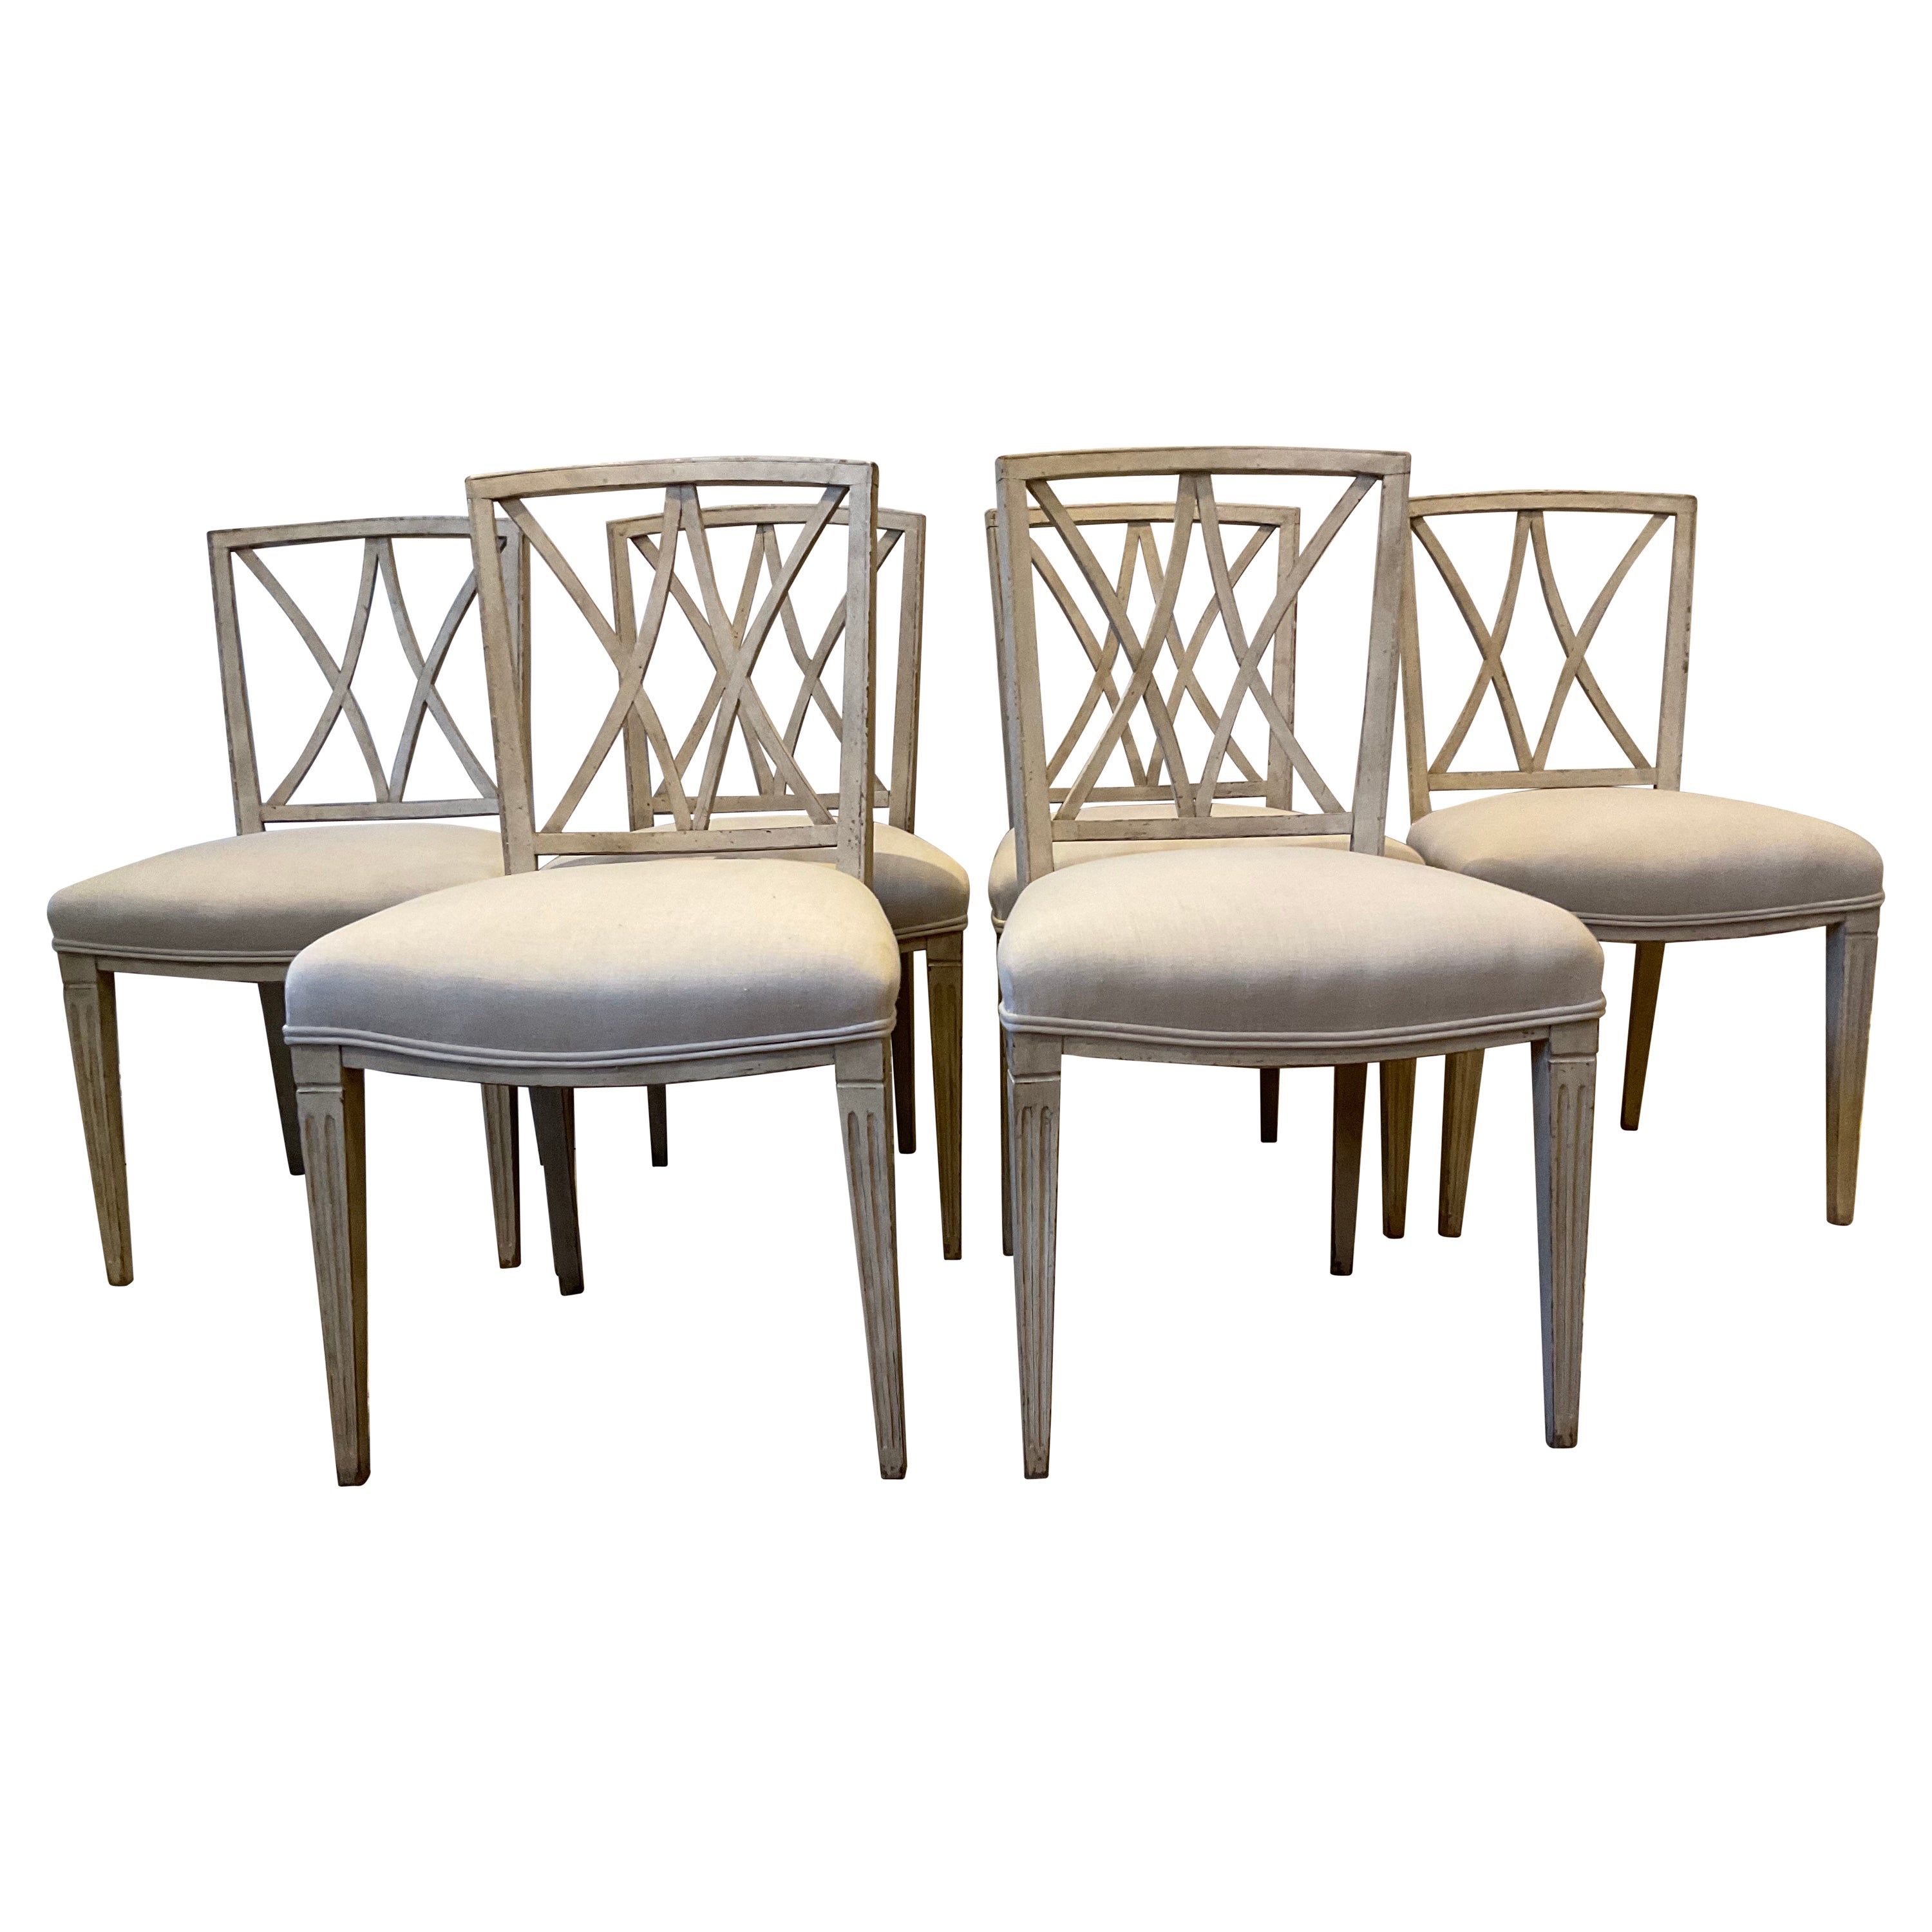 Set of 6, 1940s Stylish Italian Painted Lattice Backed Dining Chairs